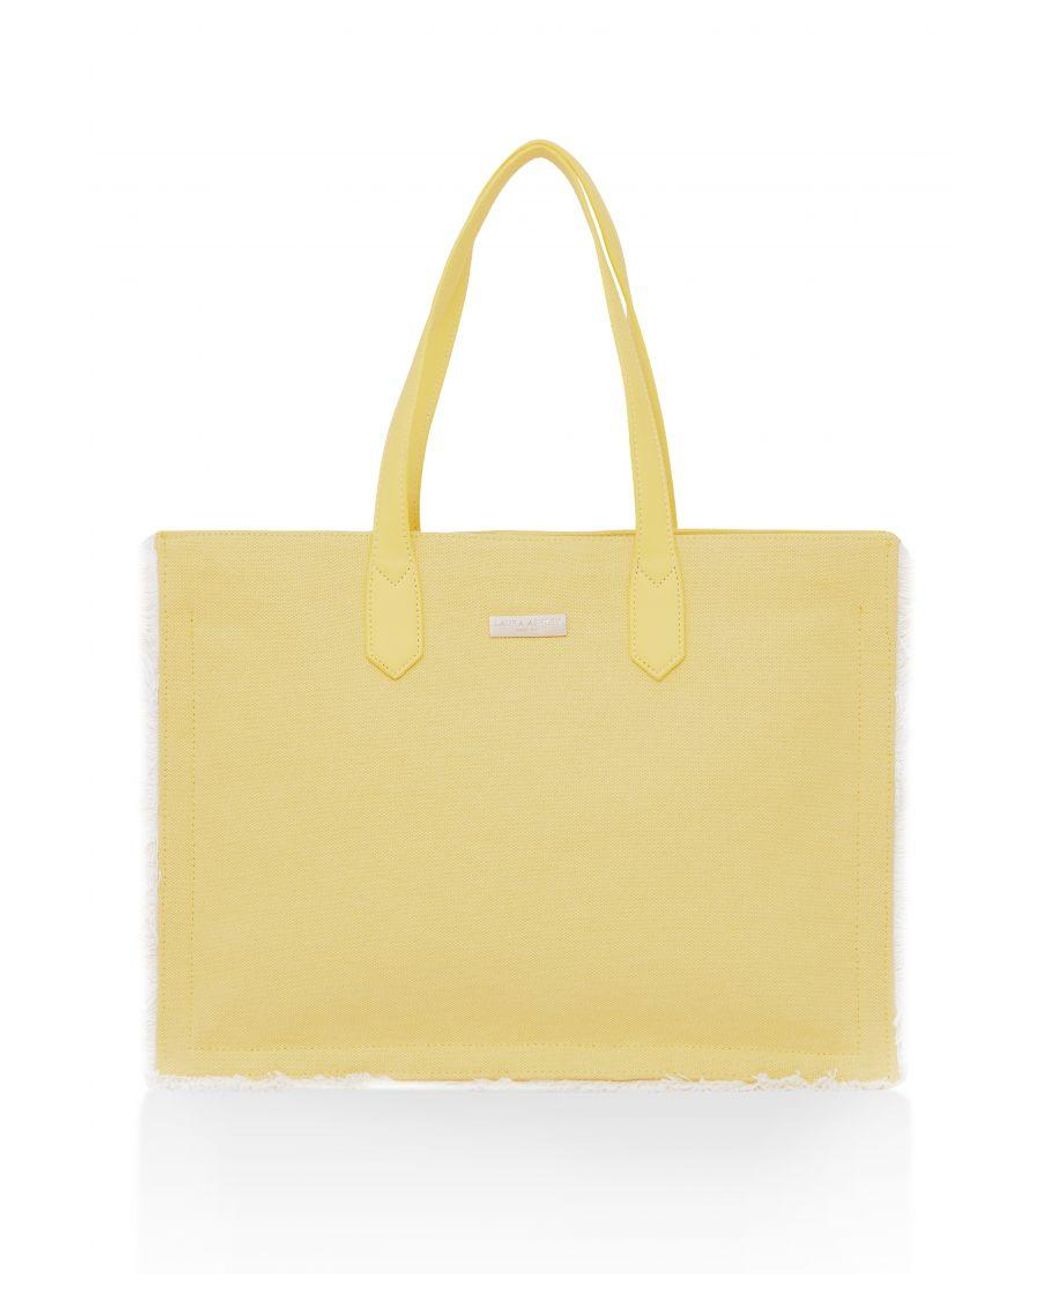 Laura Ashley Yellow Big Tote Bag